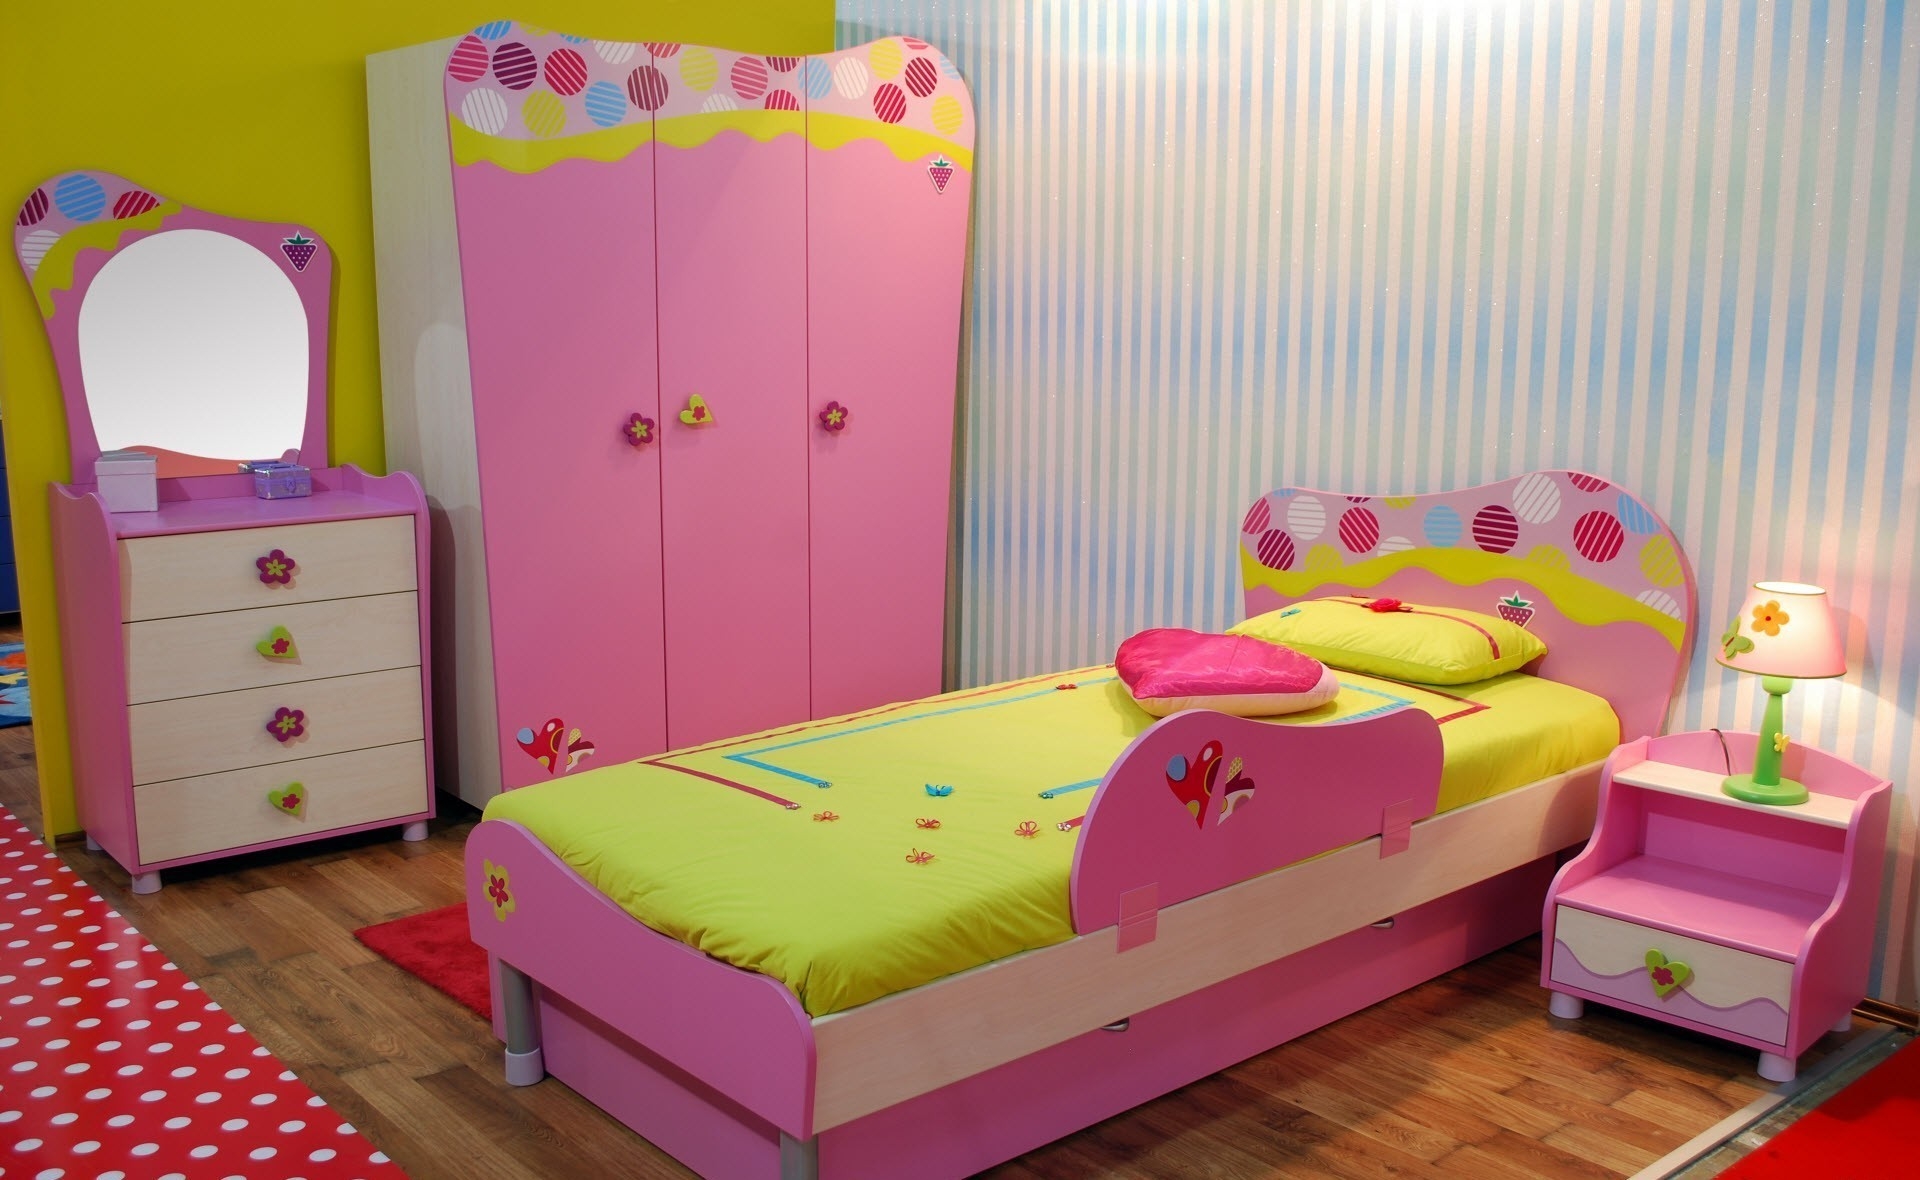 children, interior, miscellanea, miscellaneous, design, lamp, room, pillow, bed, mirror, nursery